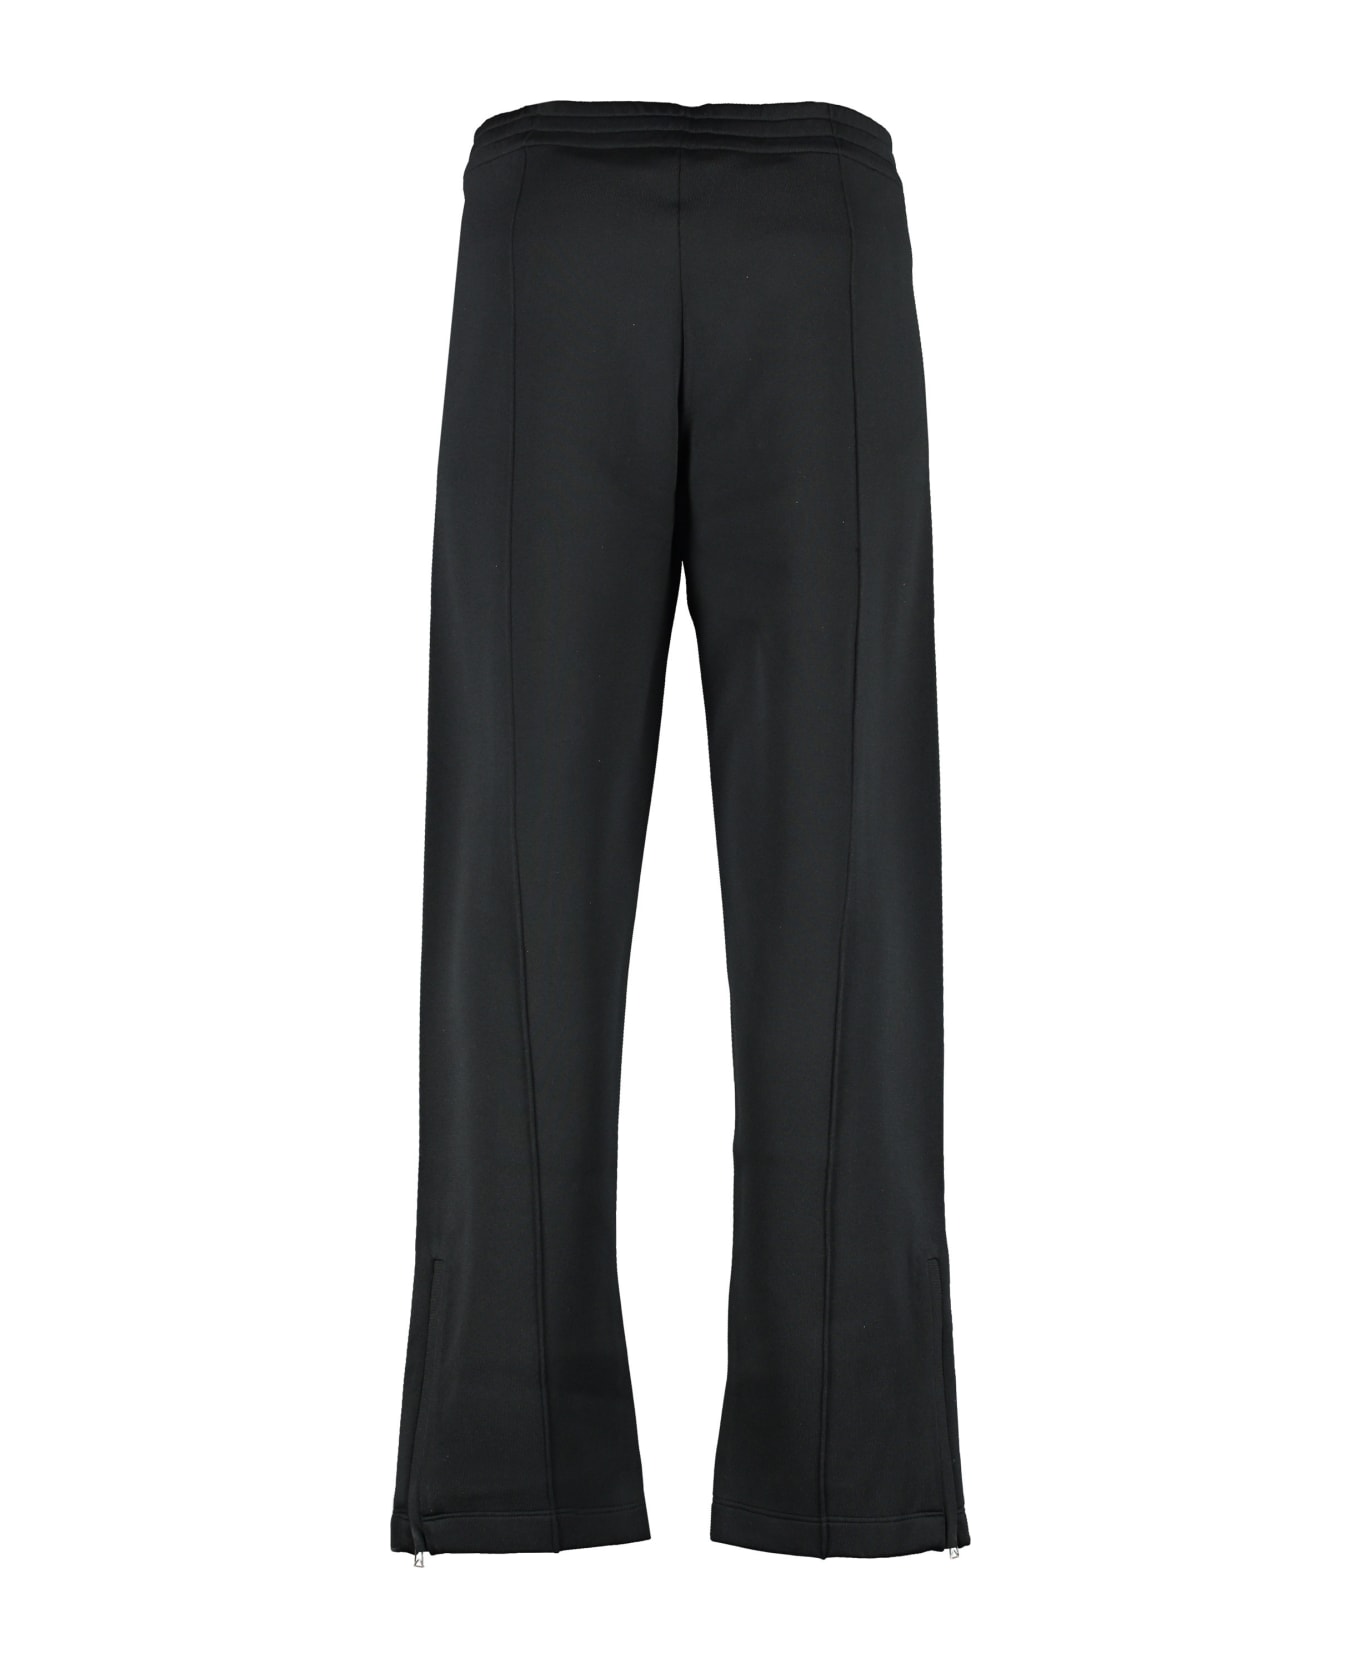 Bottega Veneta Technical Fabric Pants - black